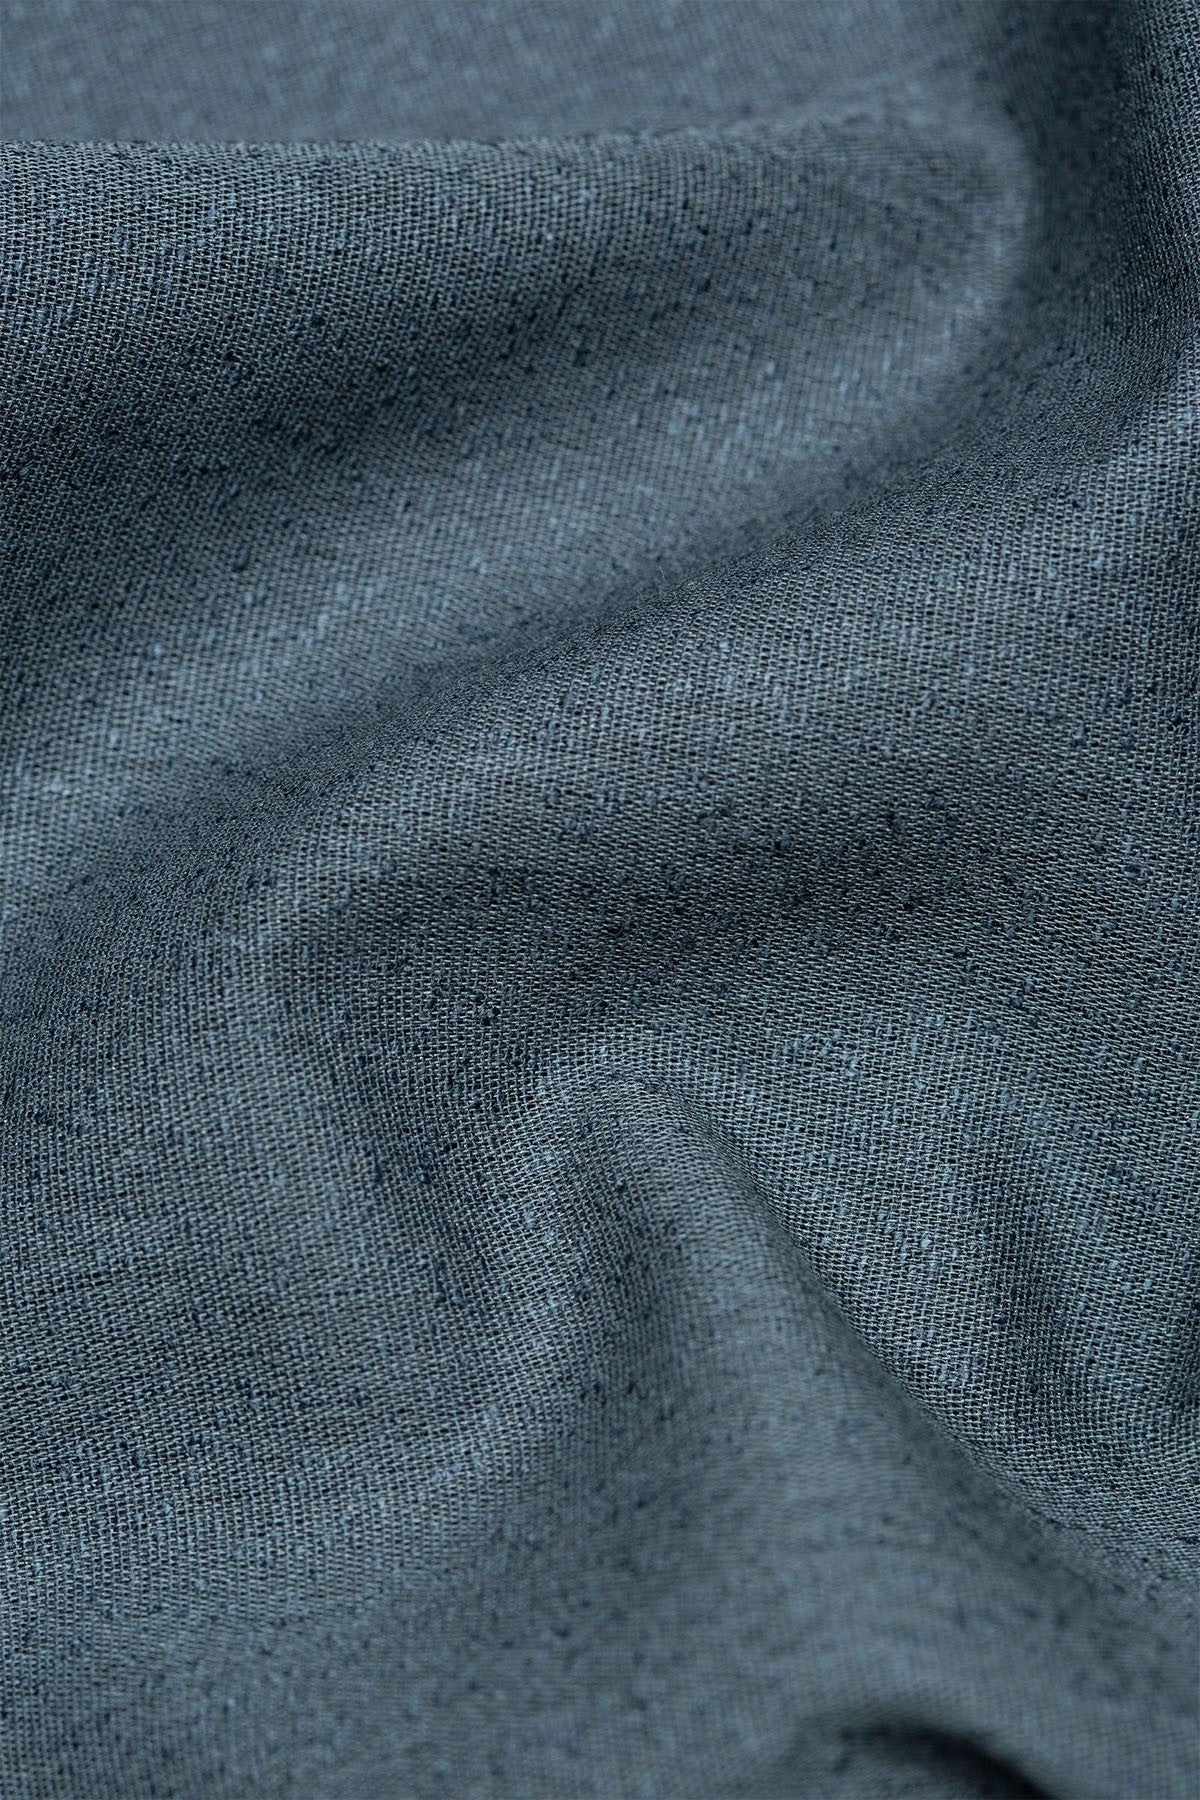 Bareeze Man Lawn Karandi Unstitched Fabric for Summer - Grey